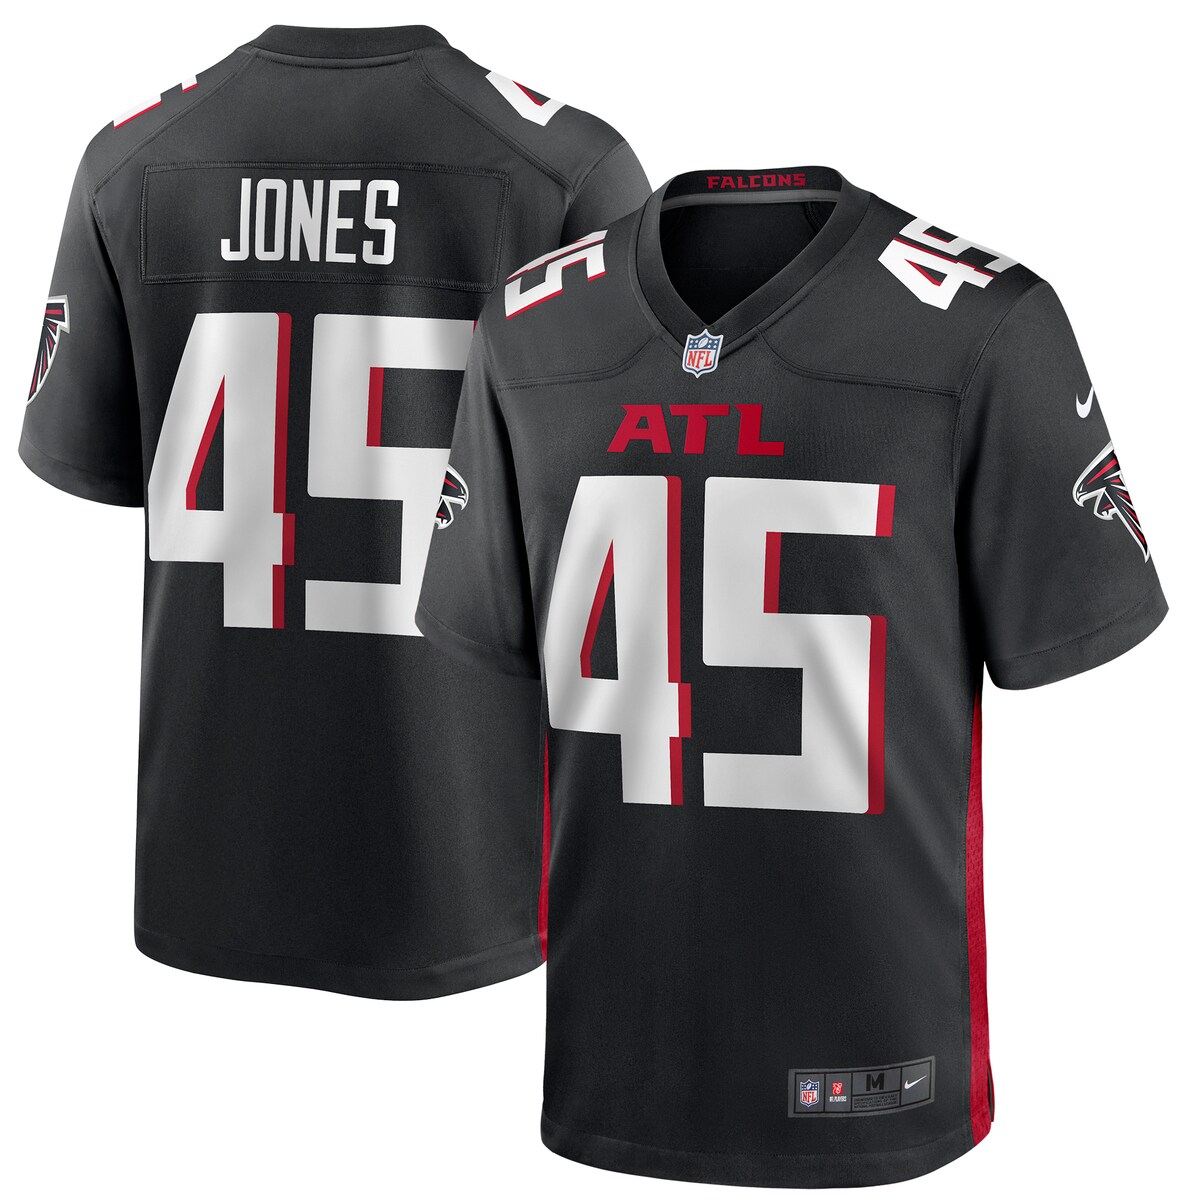 NFL ファルコンズ ディオン・ジョーンズ ユニフォーム Nike ナイキ メンズ ブラック (Mens Nike Game NFL Jersey)